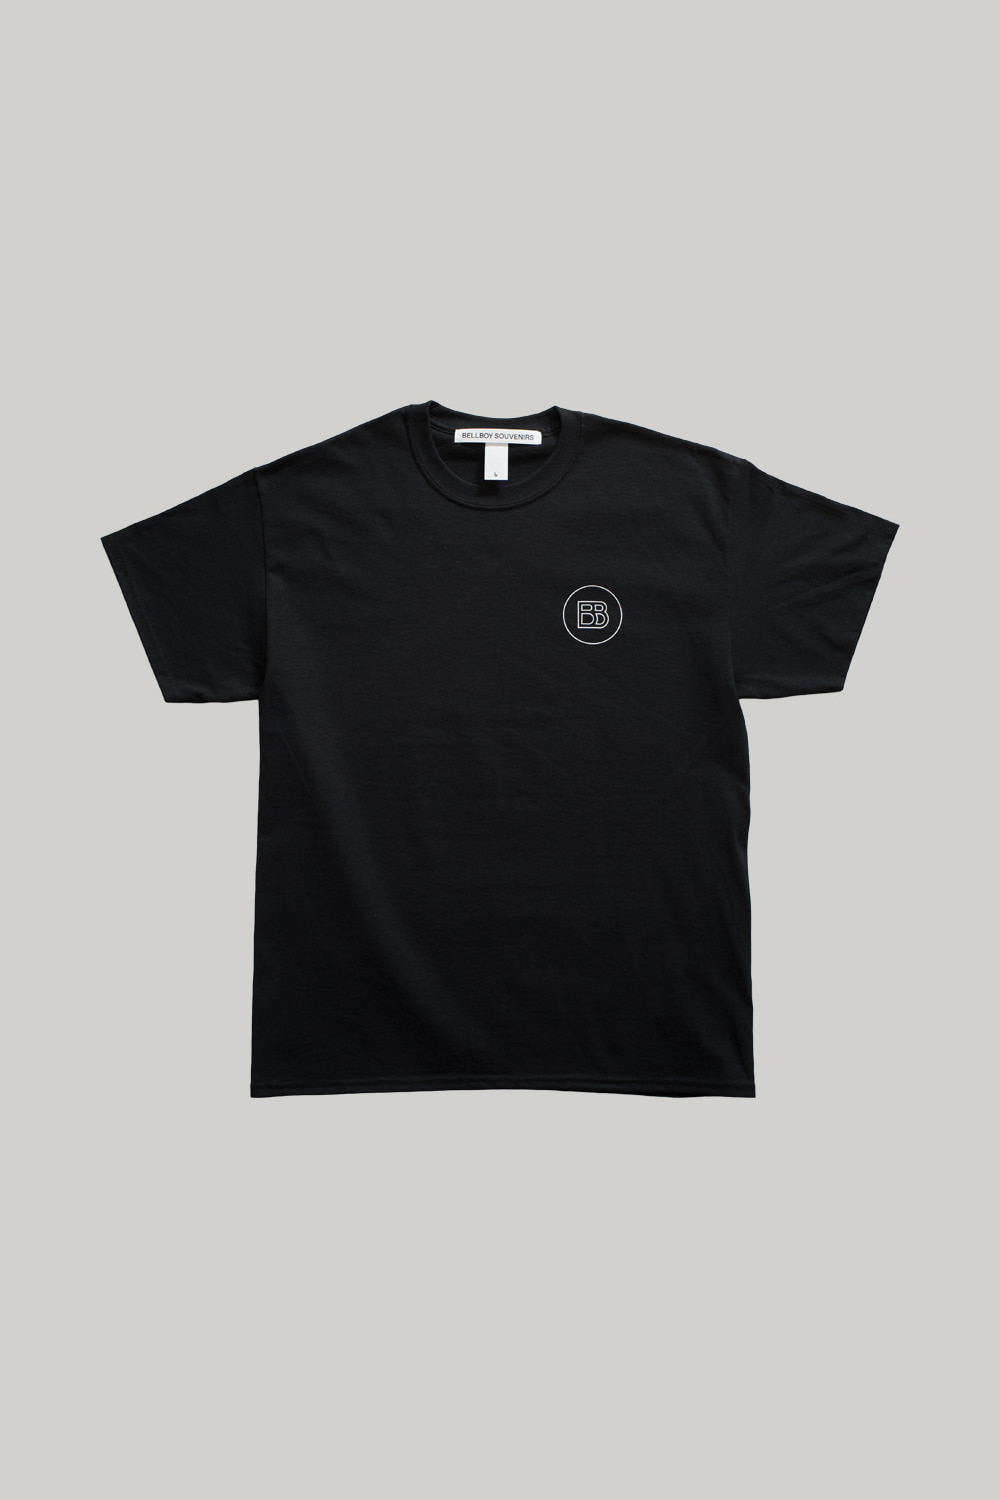 BB T-Shirts - Black 티셔츠, 워시드 헤비웨이트 티셔츠, 옥스포드셔츠, 버튼다운셔츠, 메신저백, 캔버스백